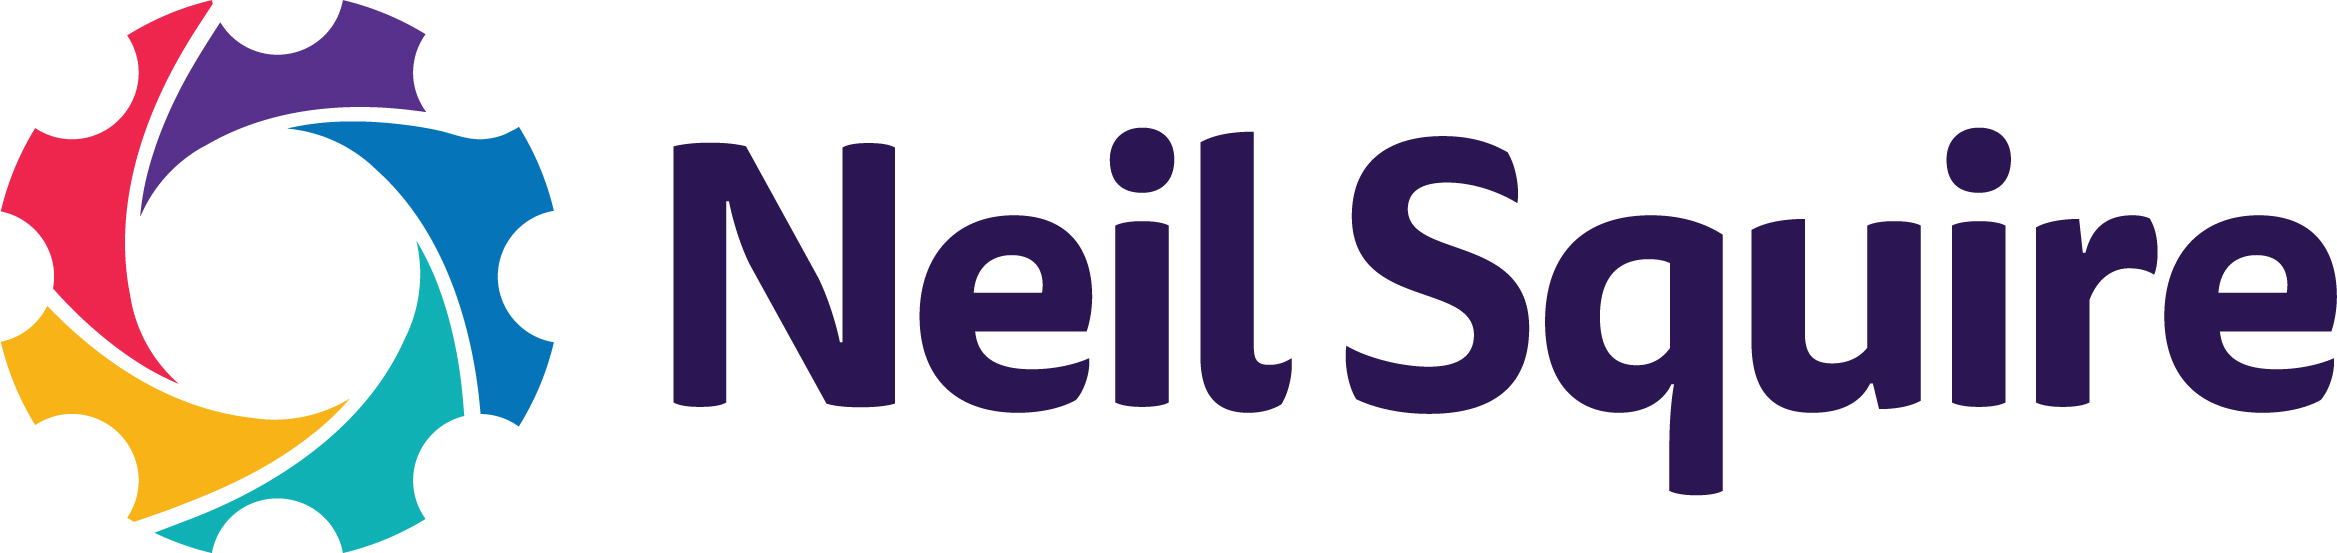 Neil Squire Logo